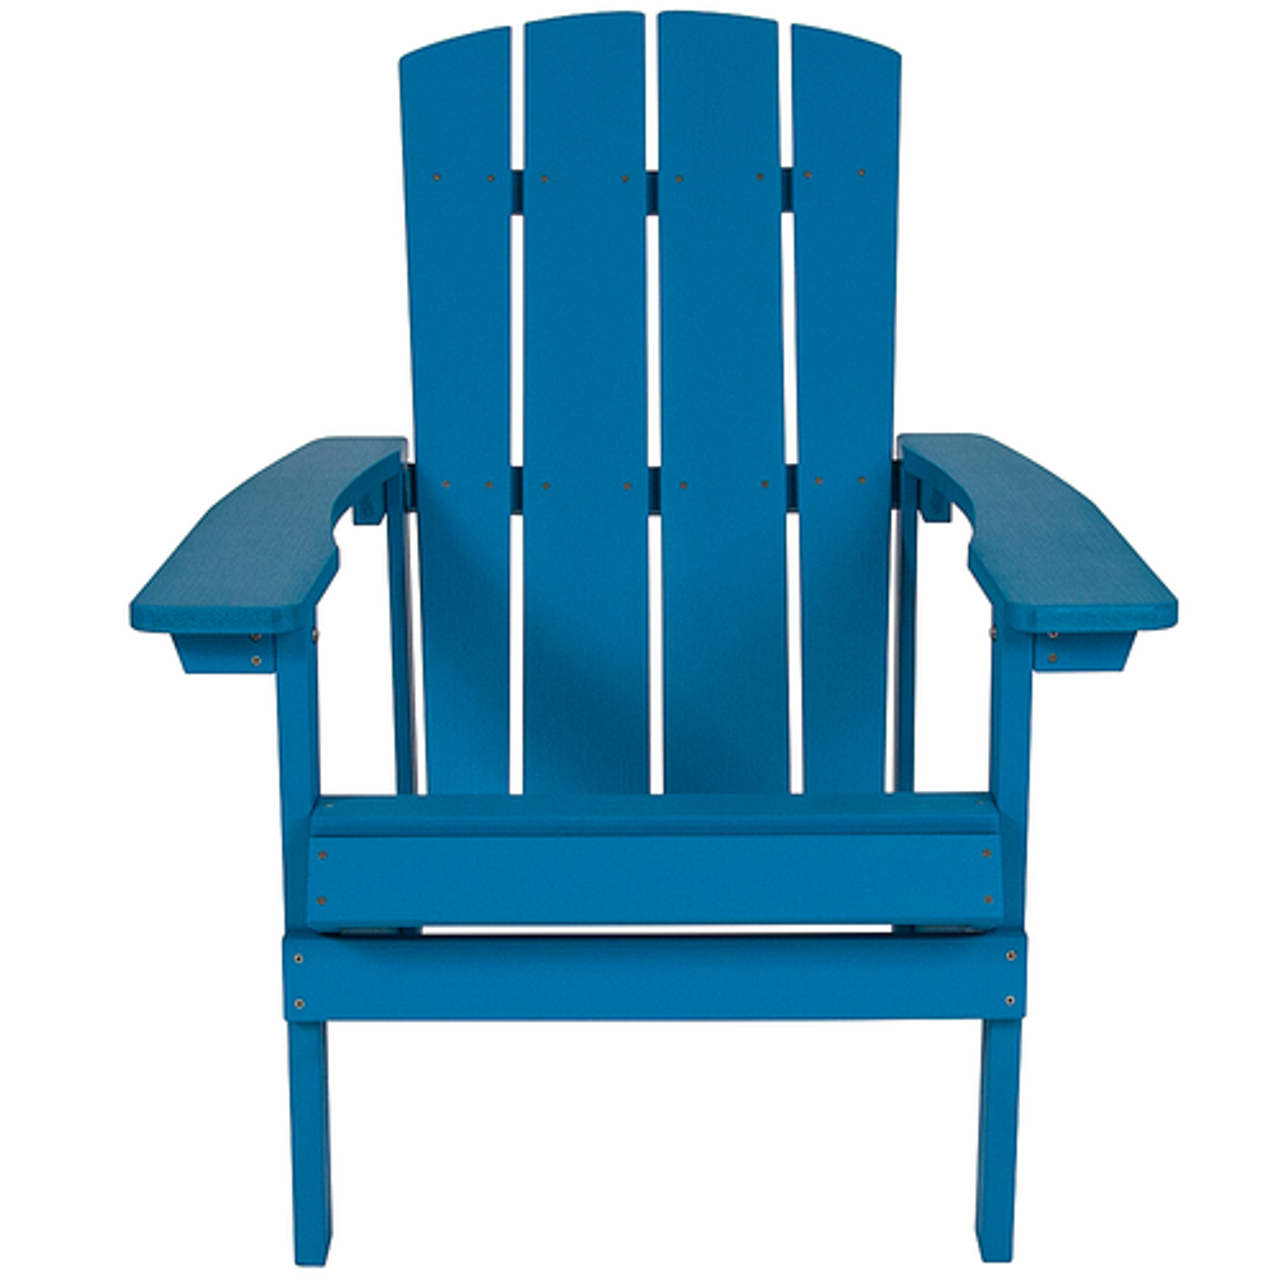 Flash Furniture - Charlestown Adirondack Chair (set of 4) - Blue